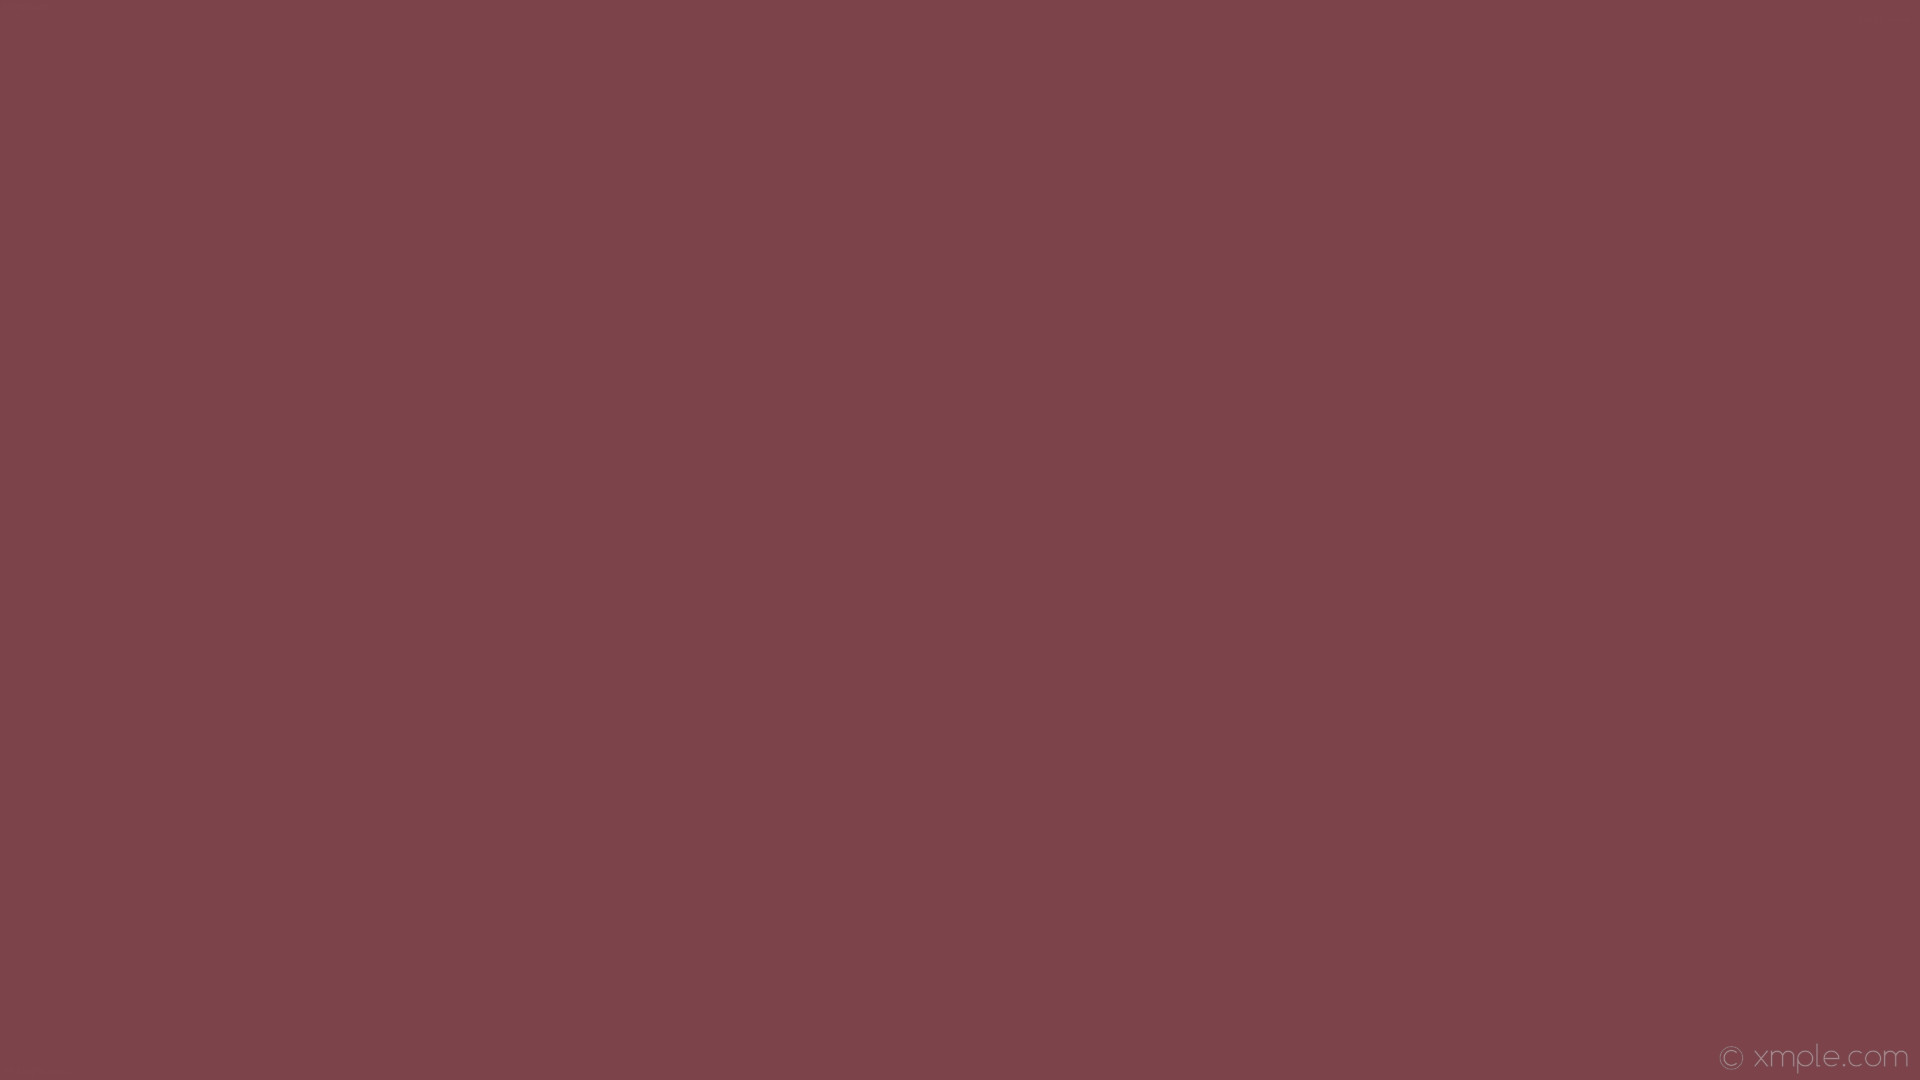 1920x1080 wallpaper single red plain solid color one colour #7c434b